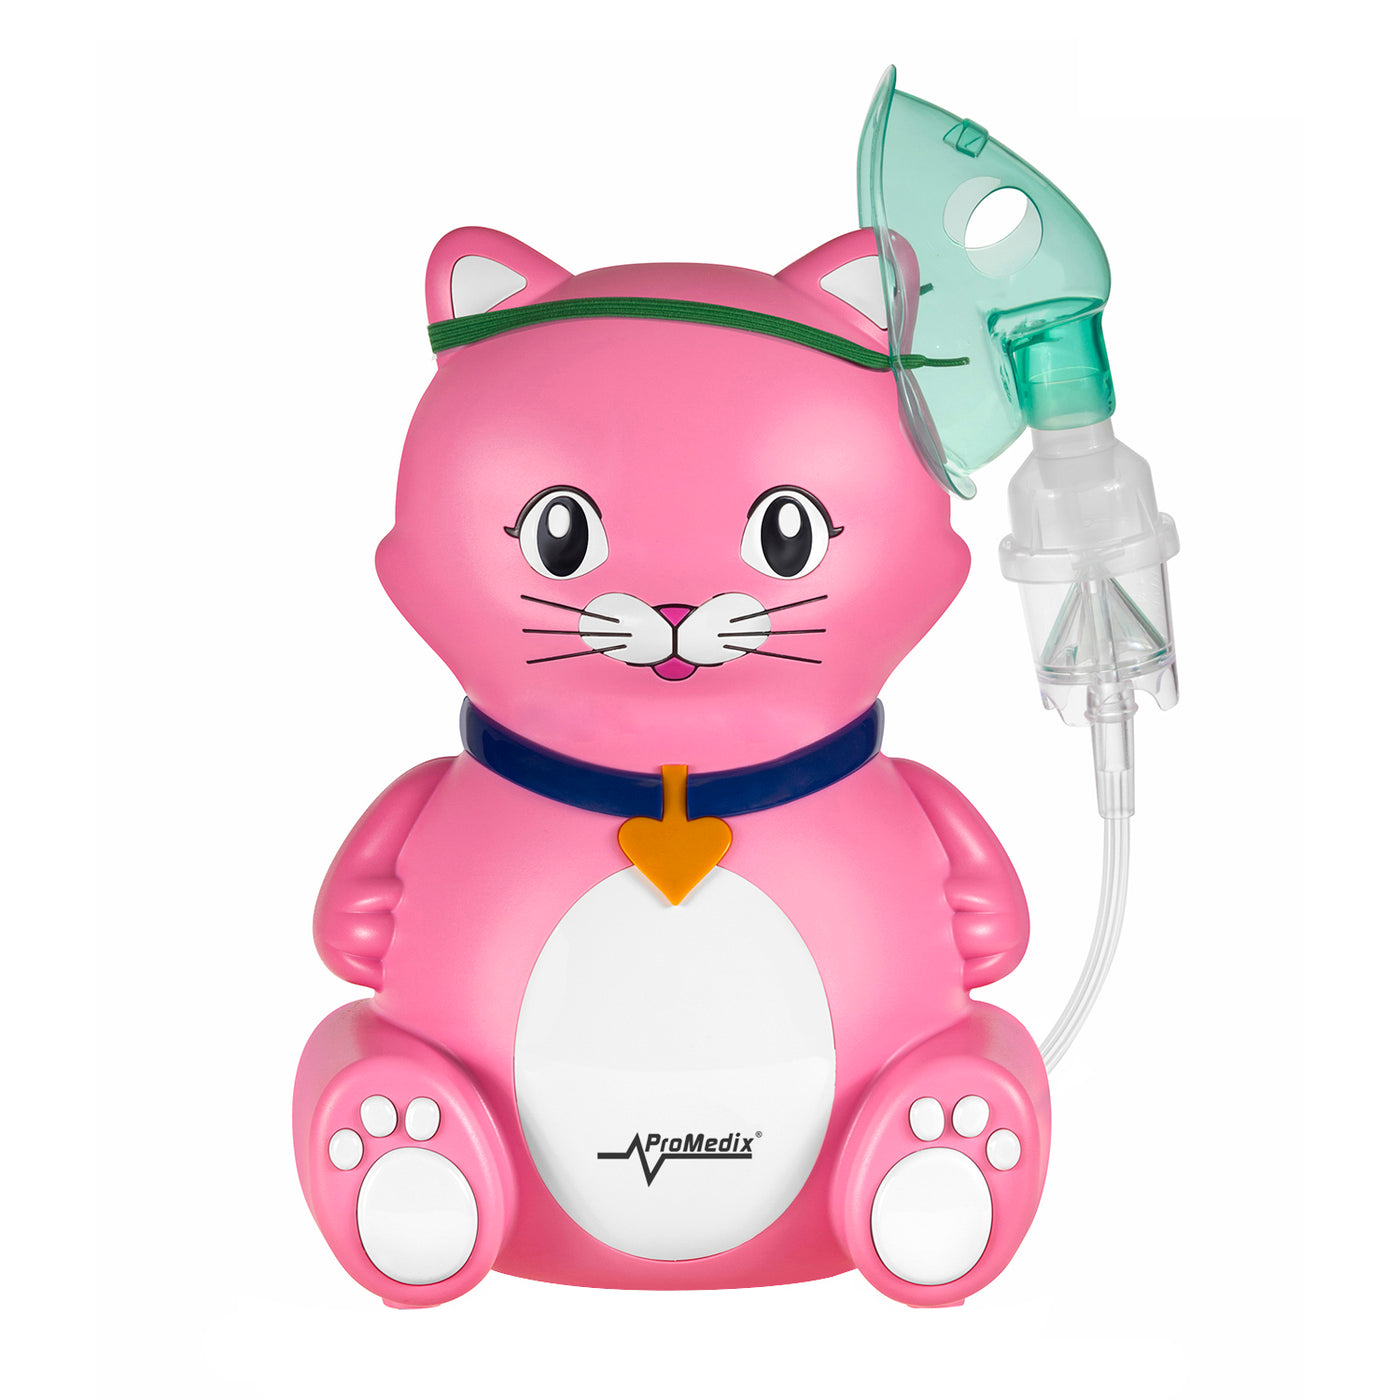 Inhalator dla dzieci kot Promedix PR-816, zestaw nebulizator, maski, filterki